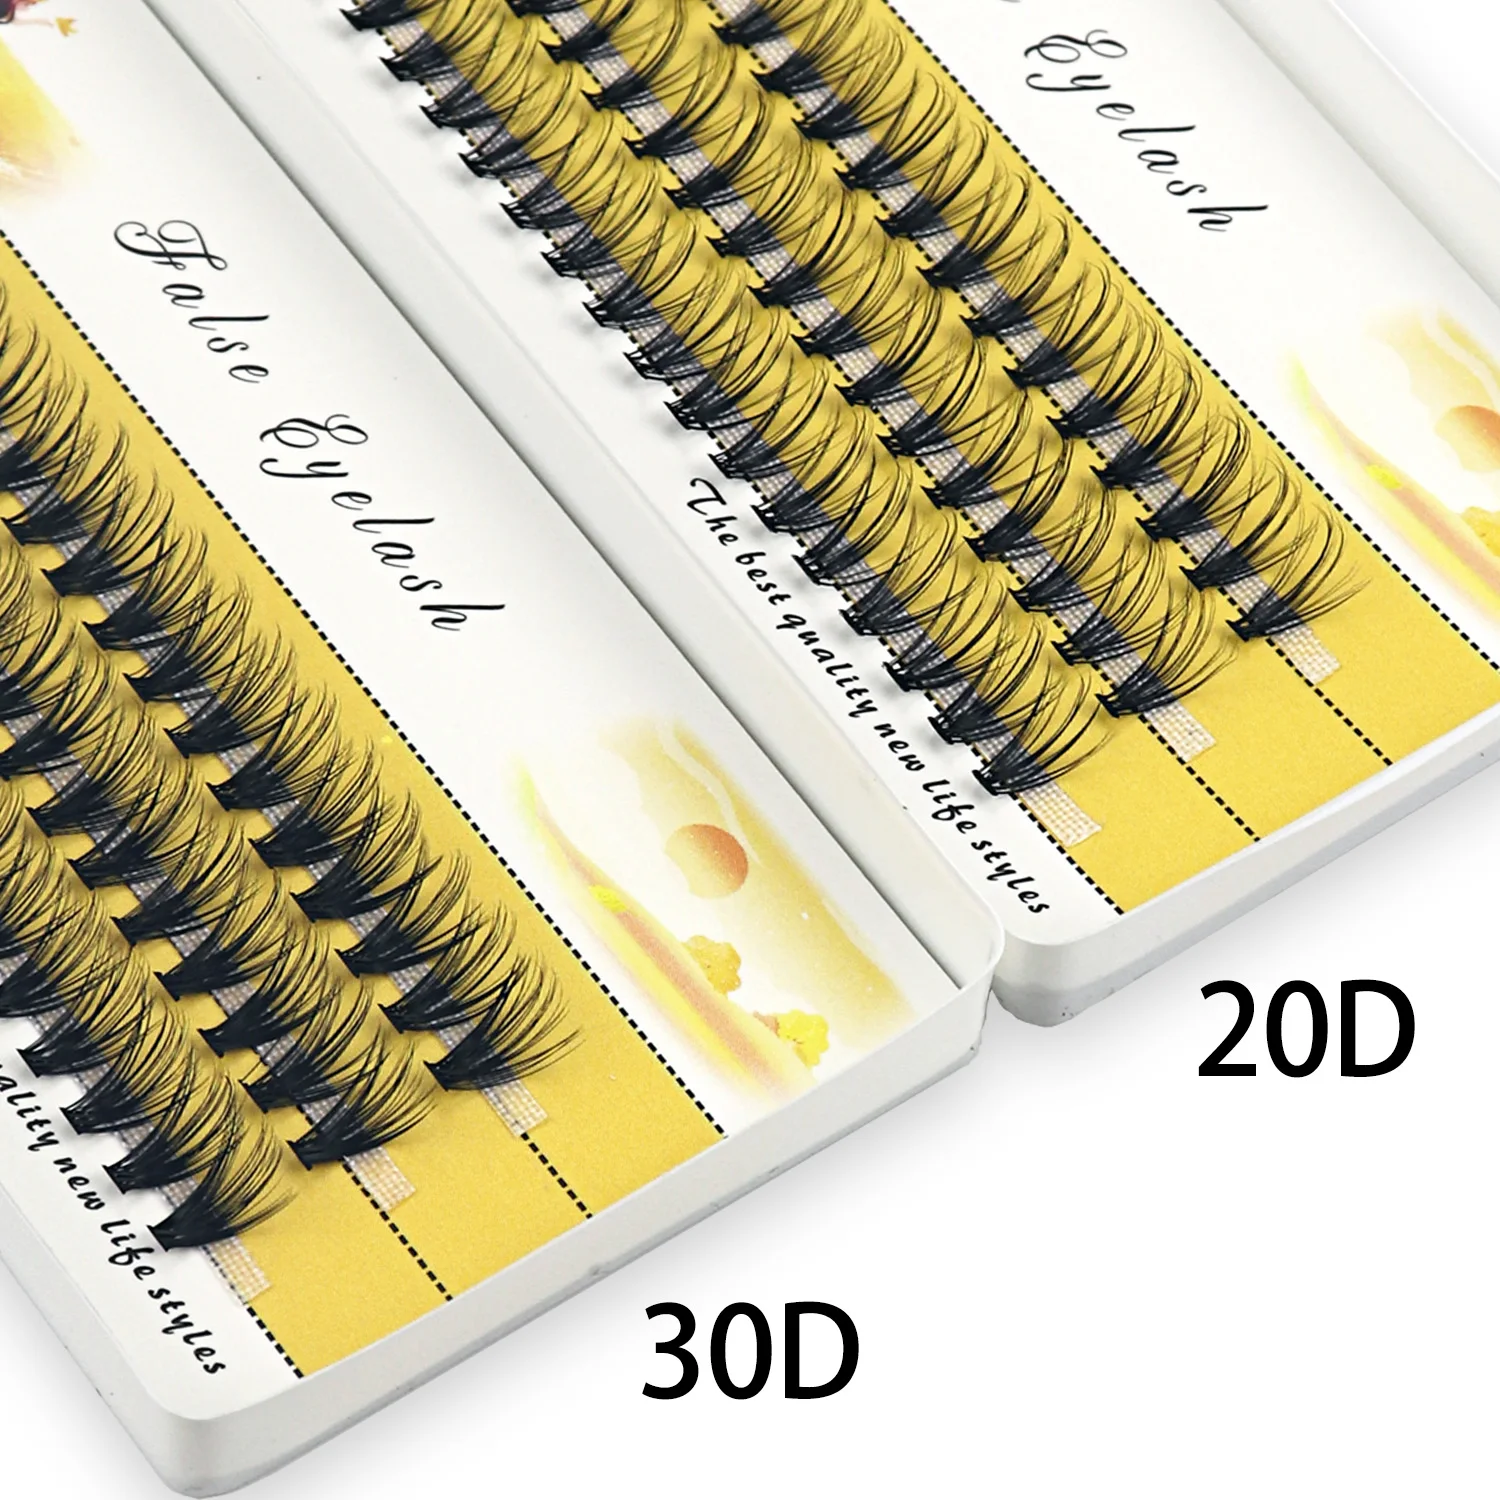 20/30/40D kumpulan bulu mata alami ekstensi bulu mata tidak dipisah 1 kotak/60 bundel alat rias kotak lembut bulu mata grosir